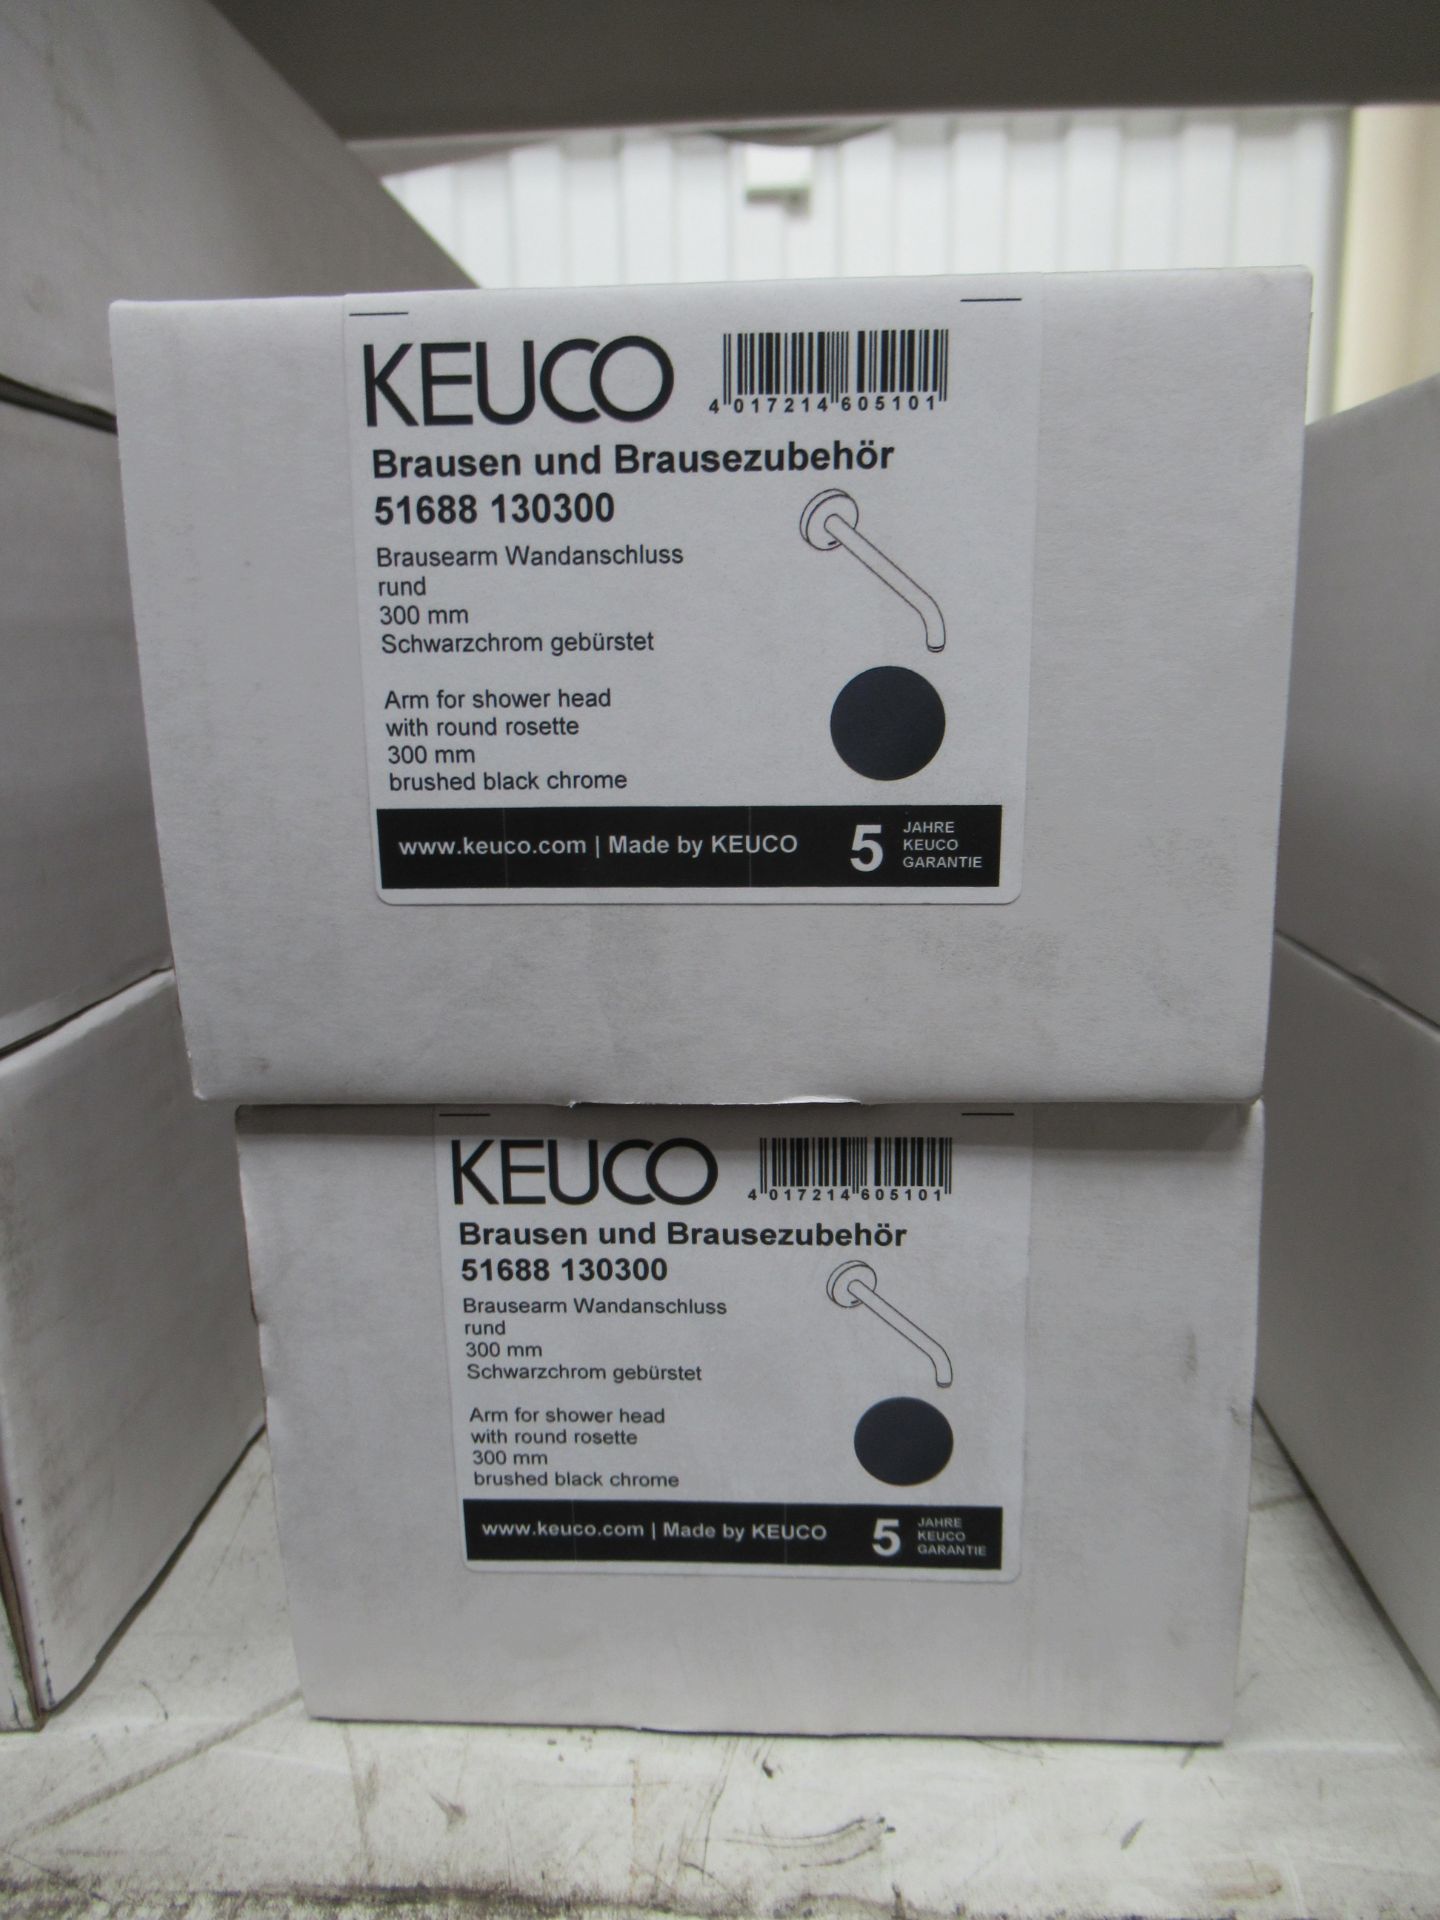 2 x Keuco Arm for Shower Head, Brushed Black Chrome, P/N 51688-130300